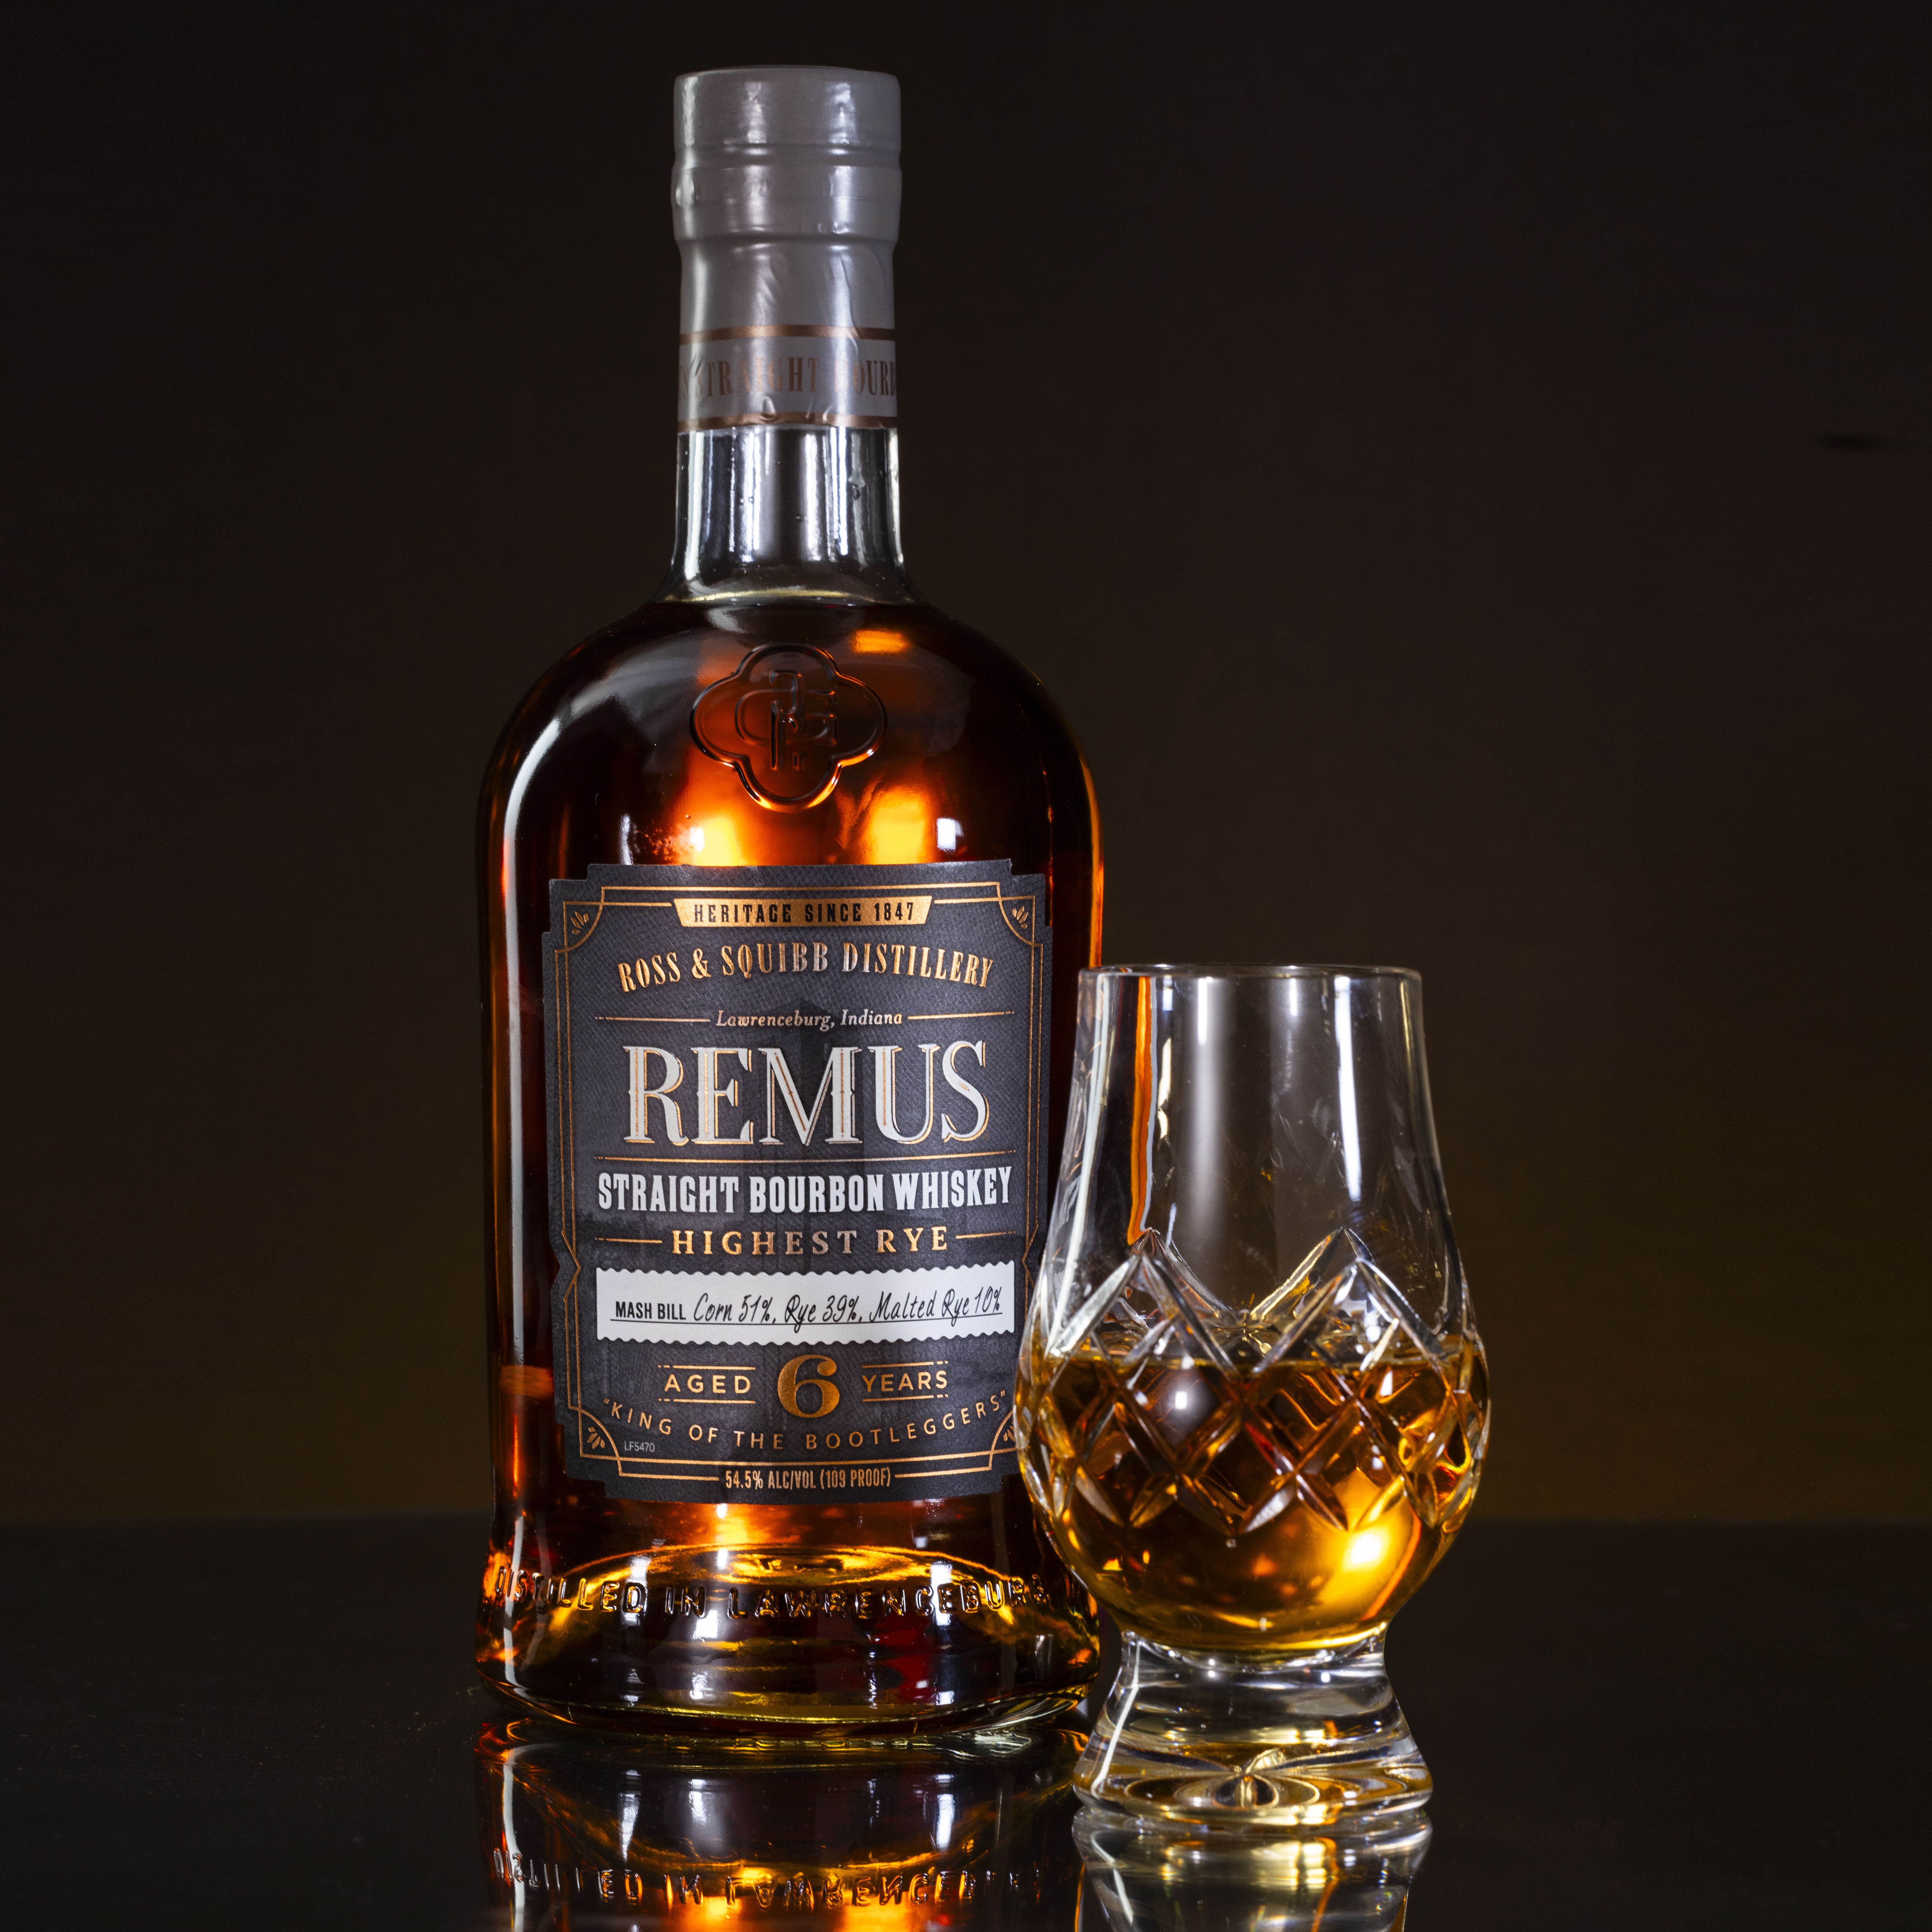 Remus Highest Rye Bourbon photo